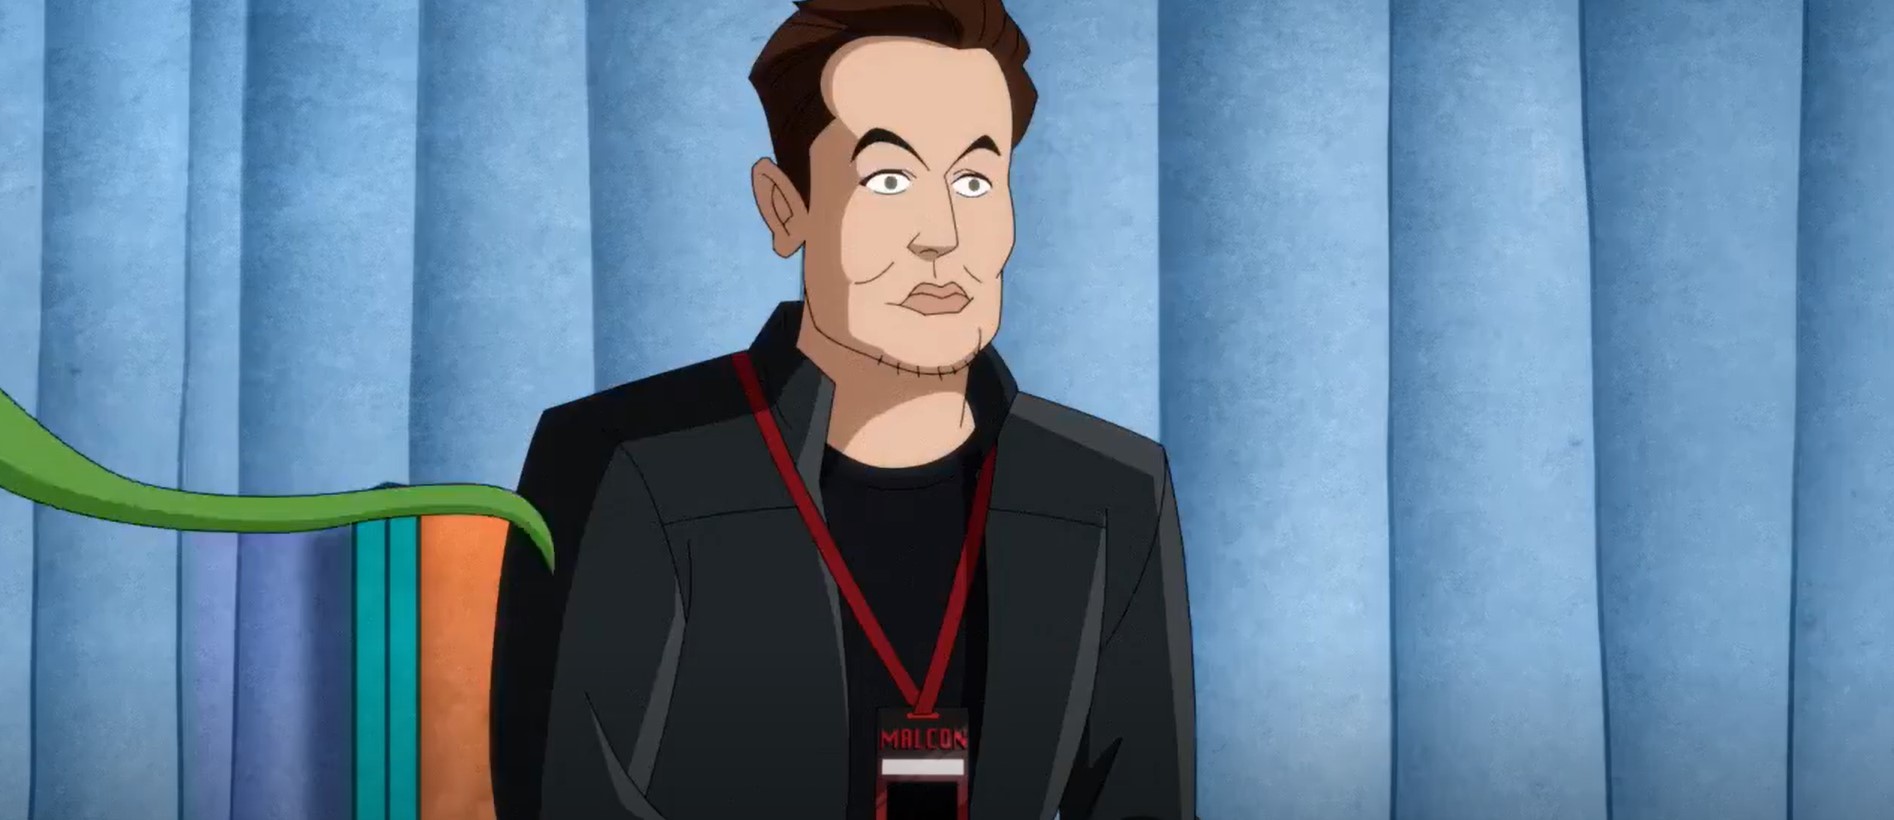 Are Elon Musk and Mark Zuckerberg in Harley Quinn Season 4?